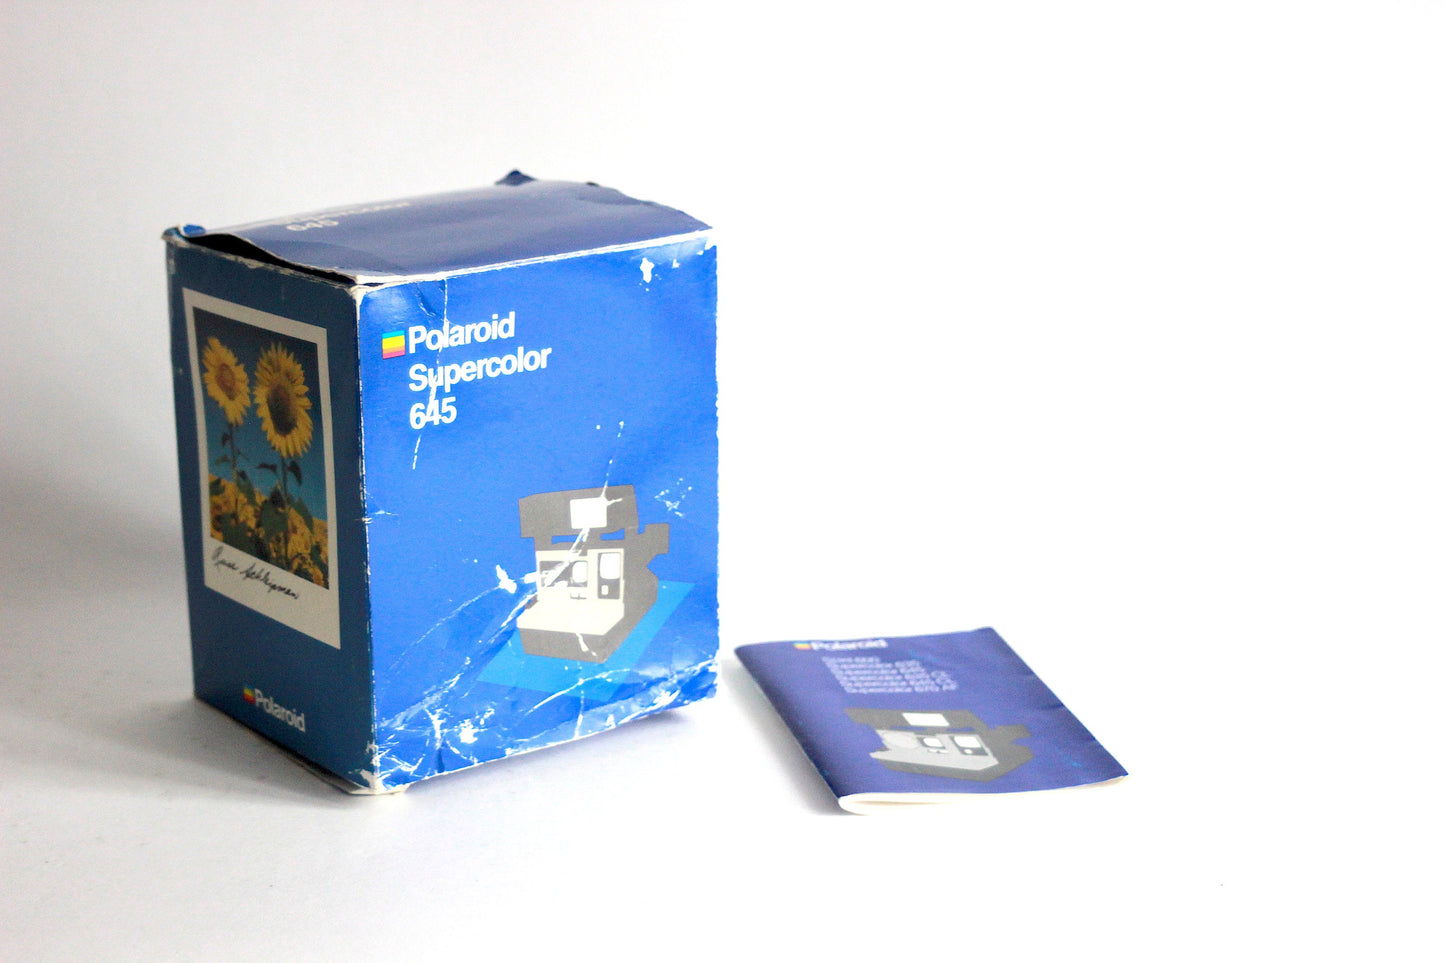 Polaroid Supercolor 645 + Original Packing and original instructions book